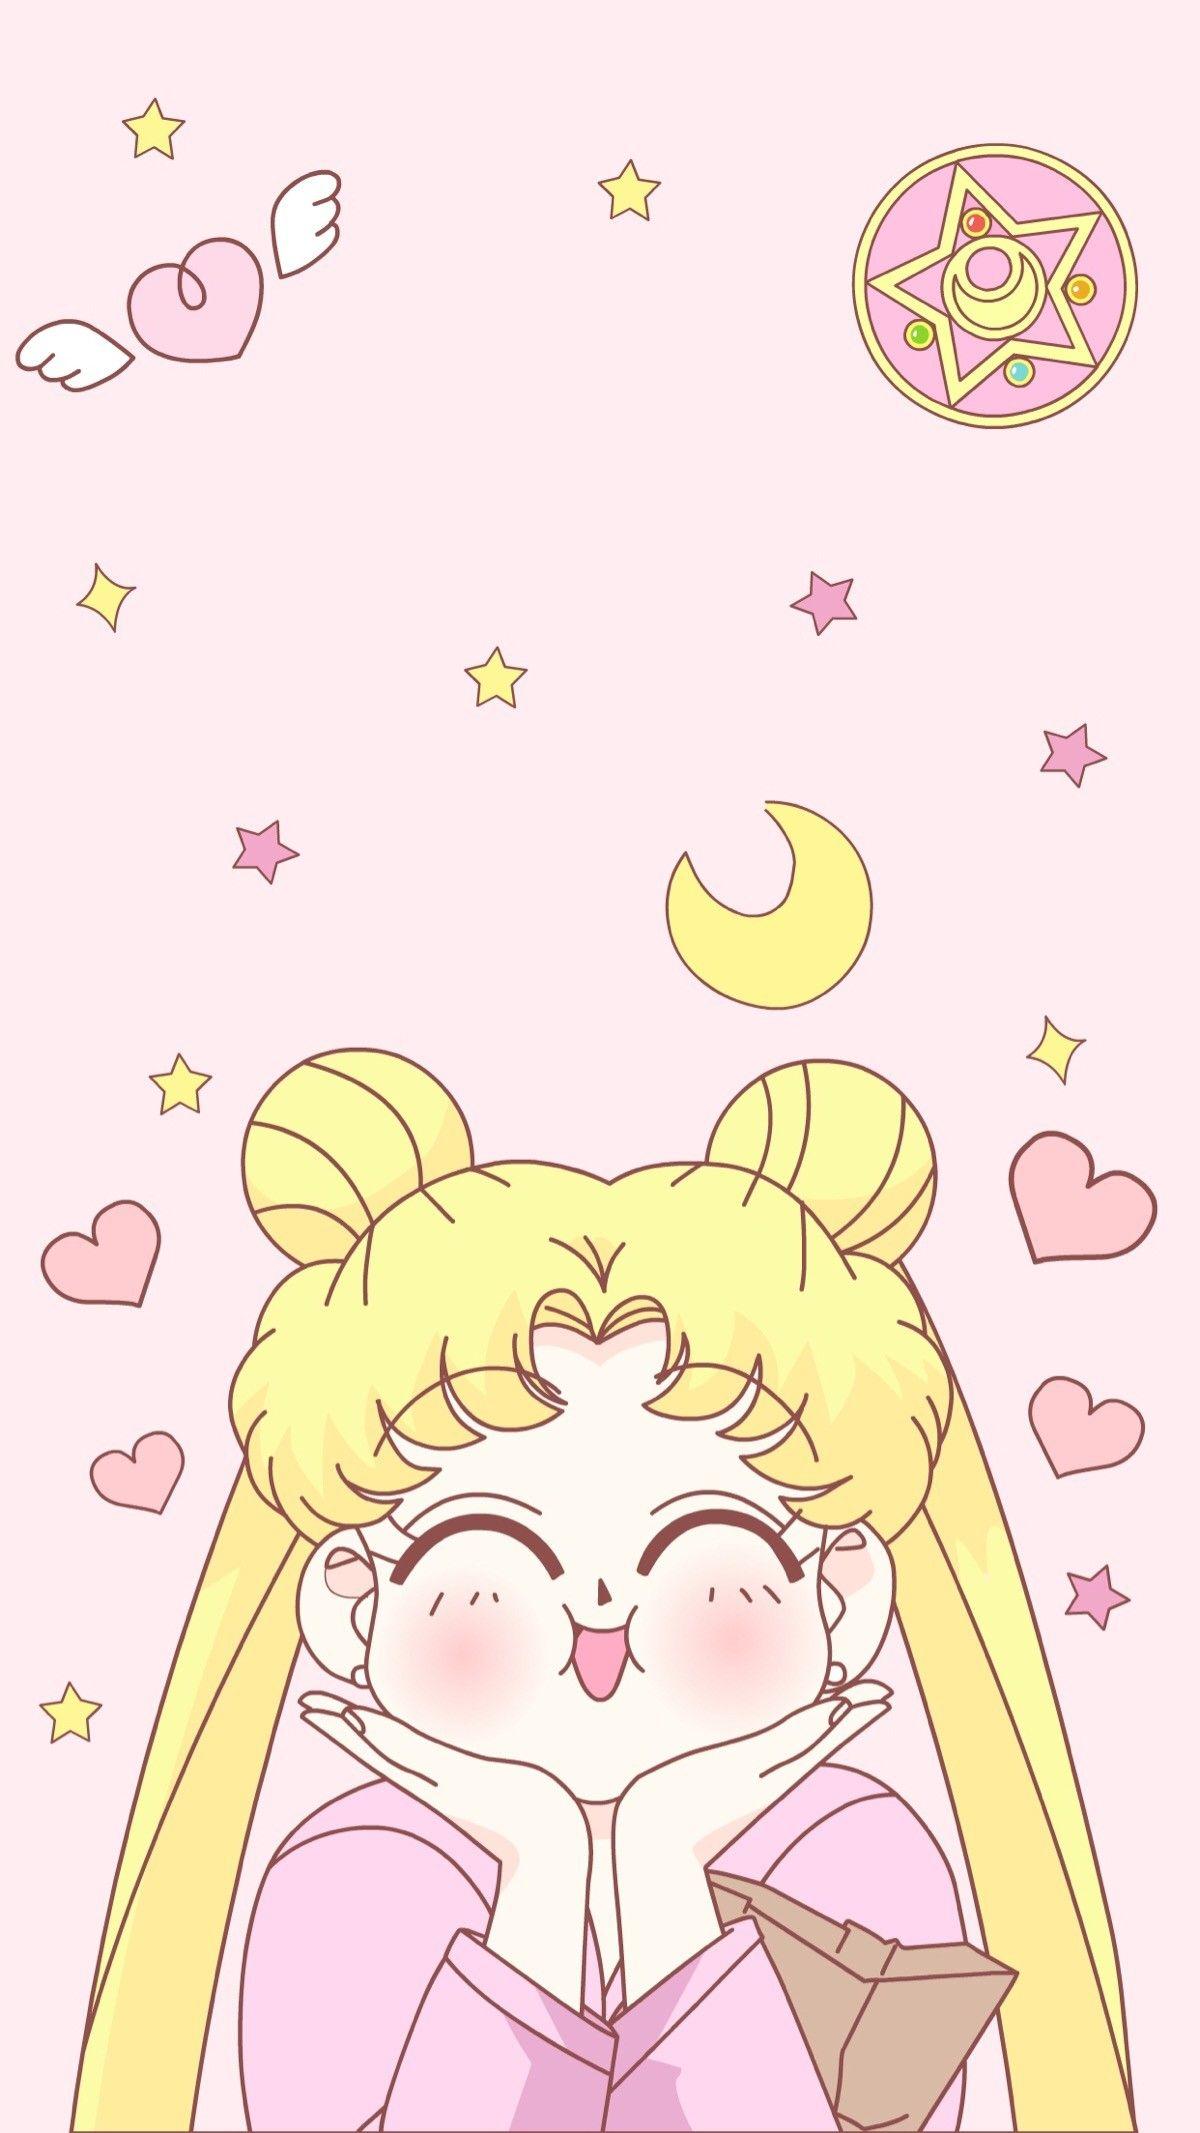 Cute Sailor Moon Wallpapers Top Free Cute Sailor Moon Backgrounds Wallpaperaccess Free sailor moon wallpaper and other anime desktop backgrounds. cute sailor moon wallpapers top free